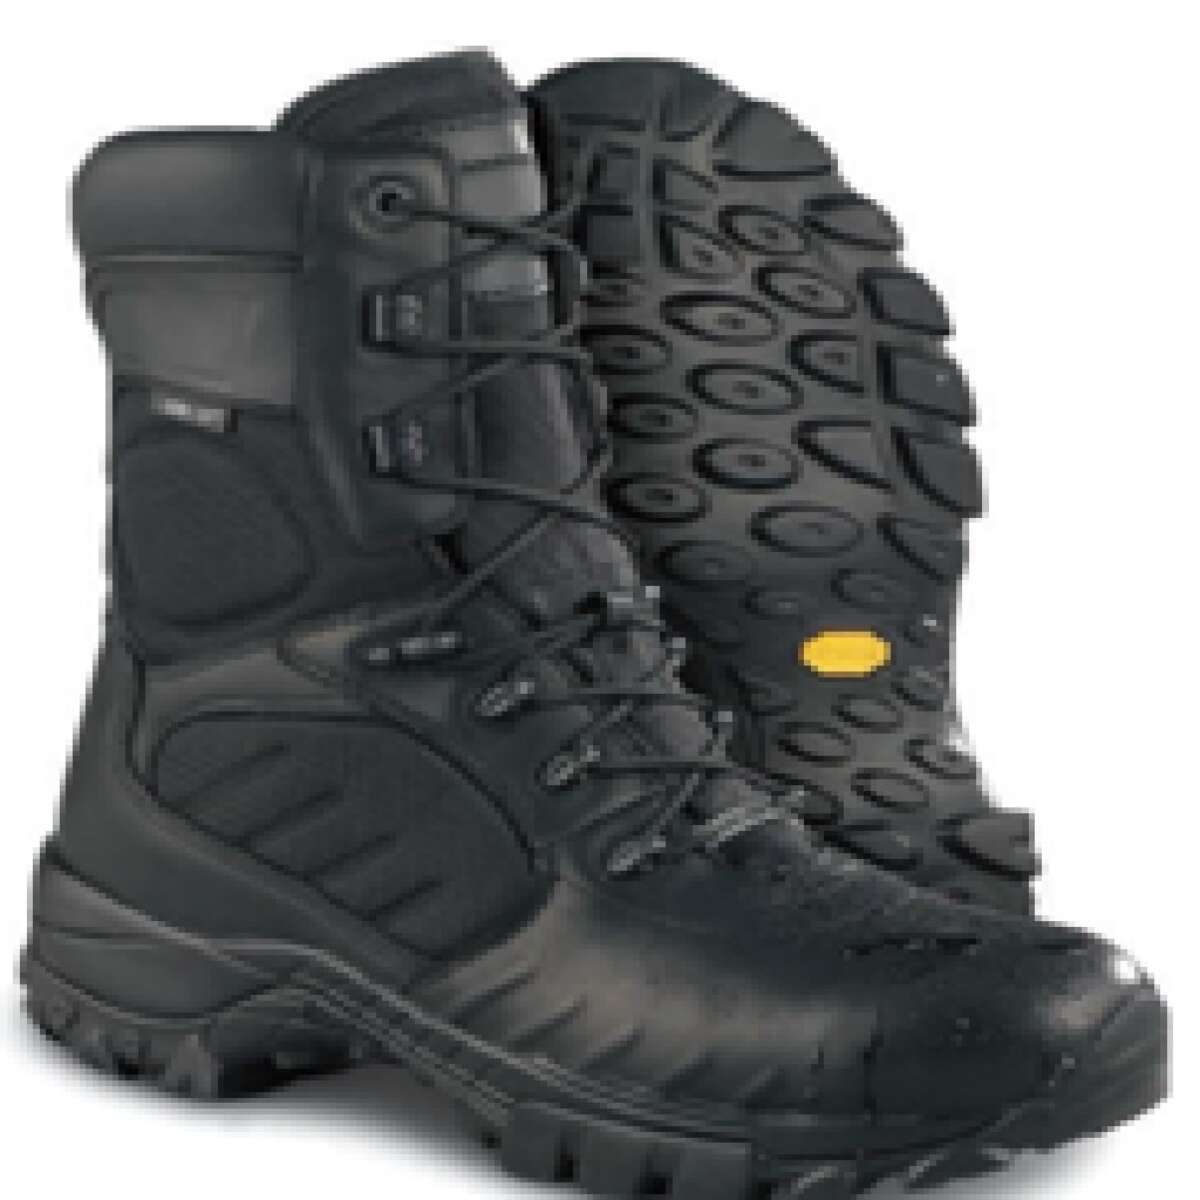 Bates Safety Boots on Sale | www.c1cu.com